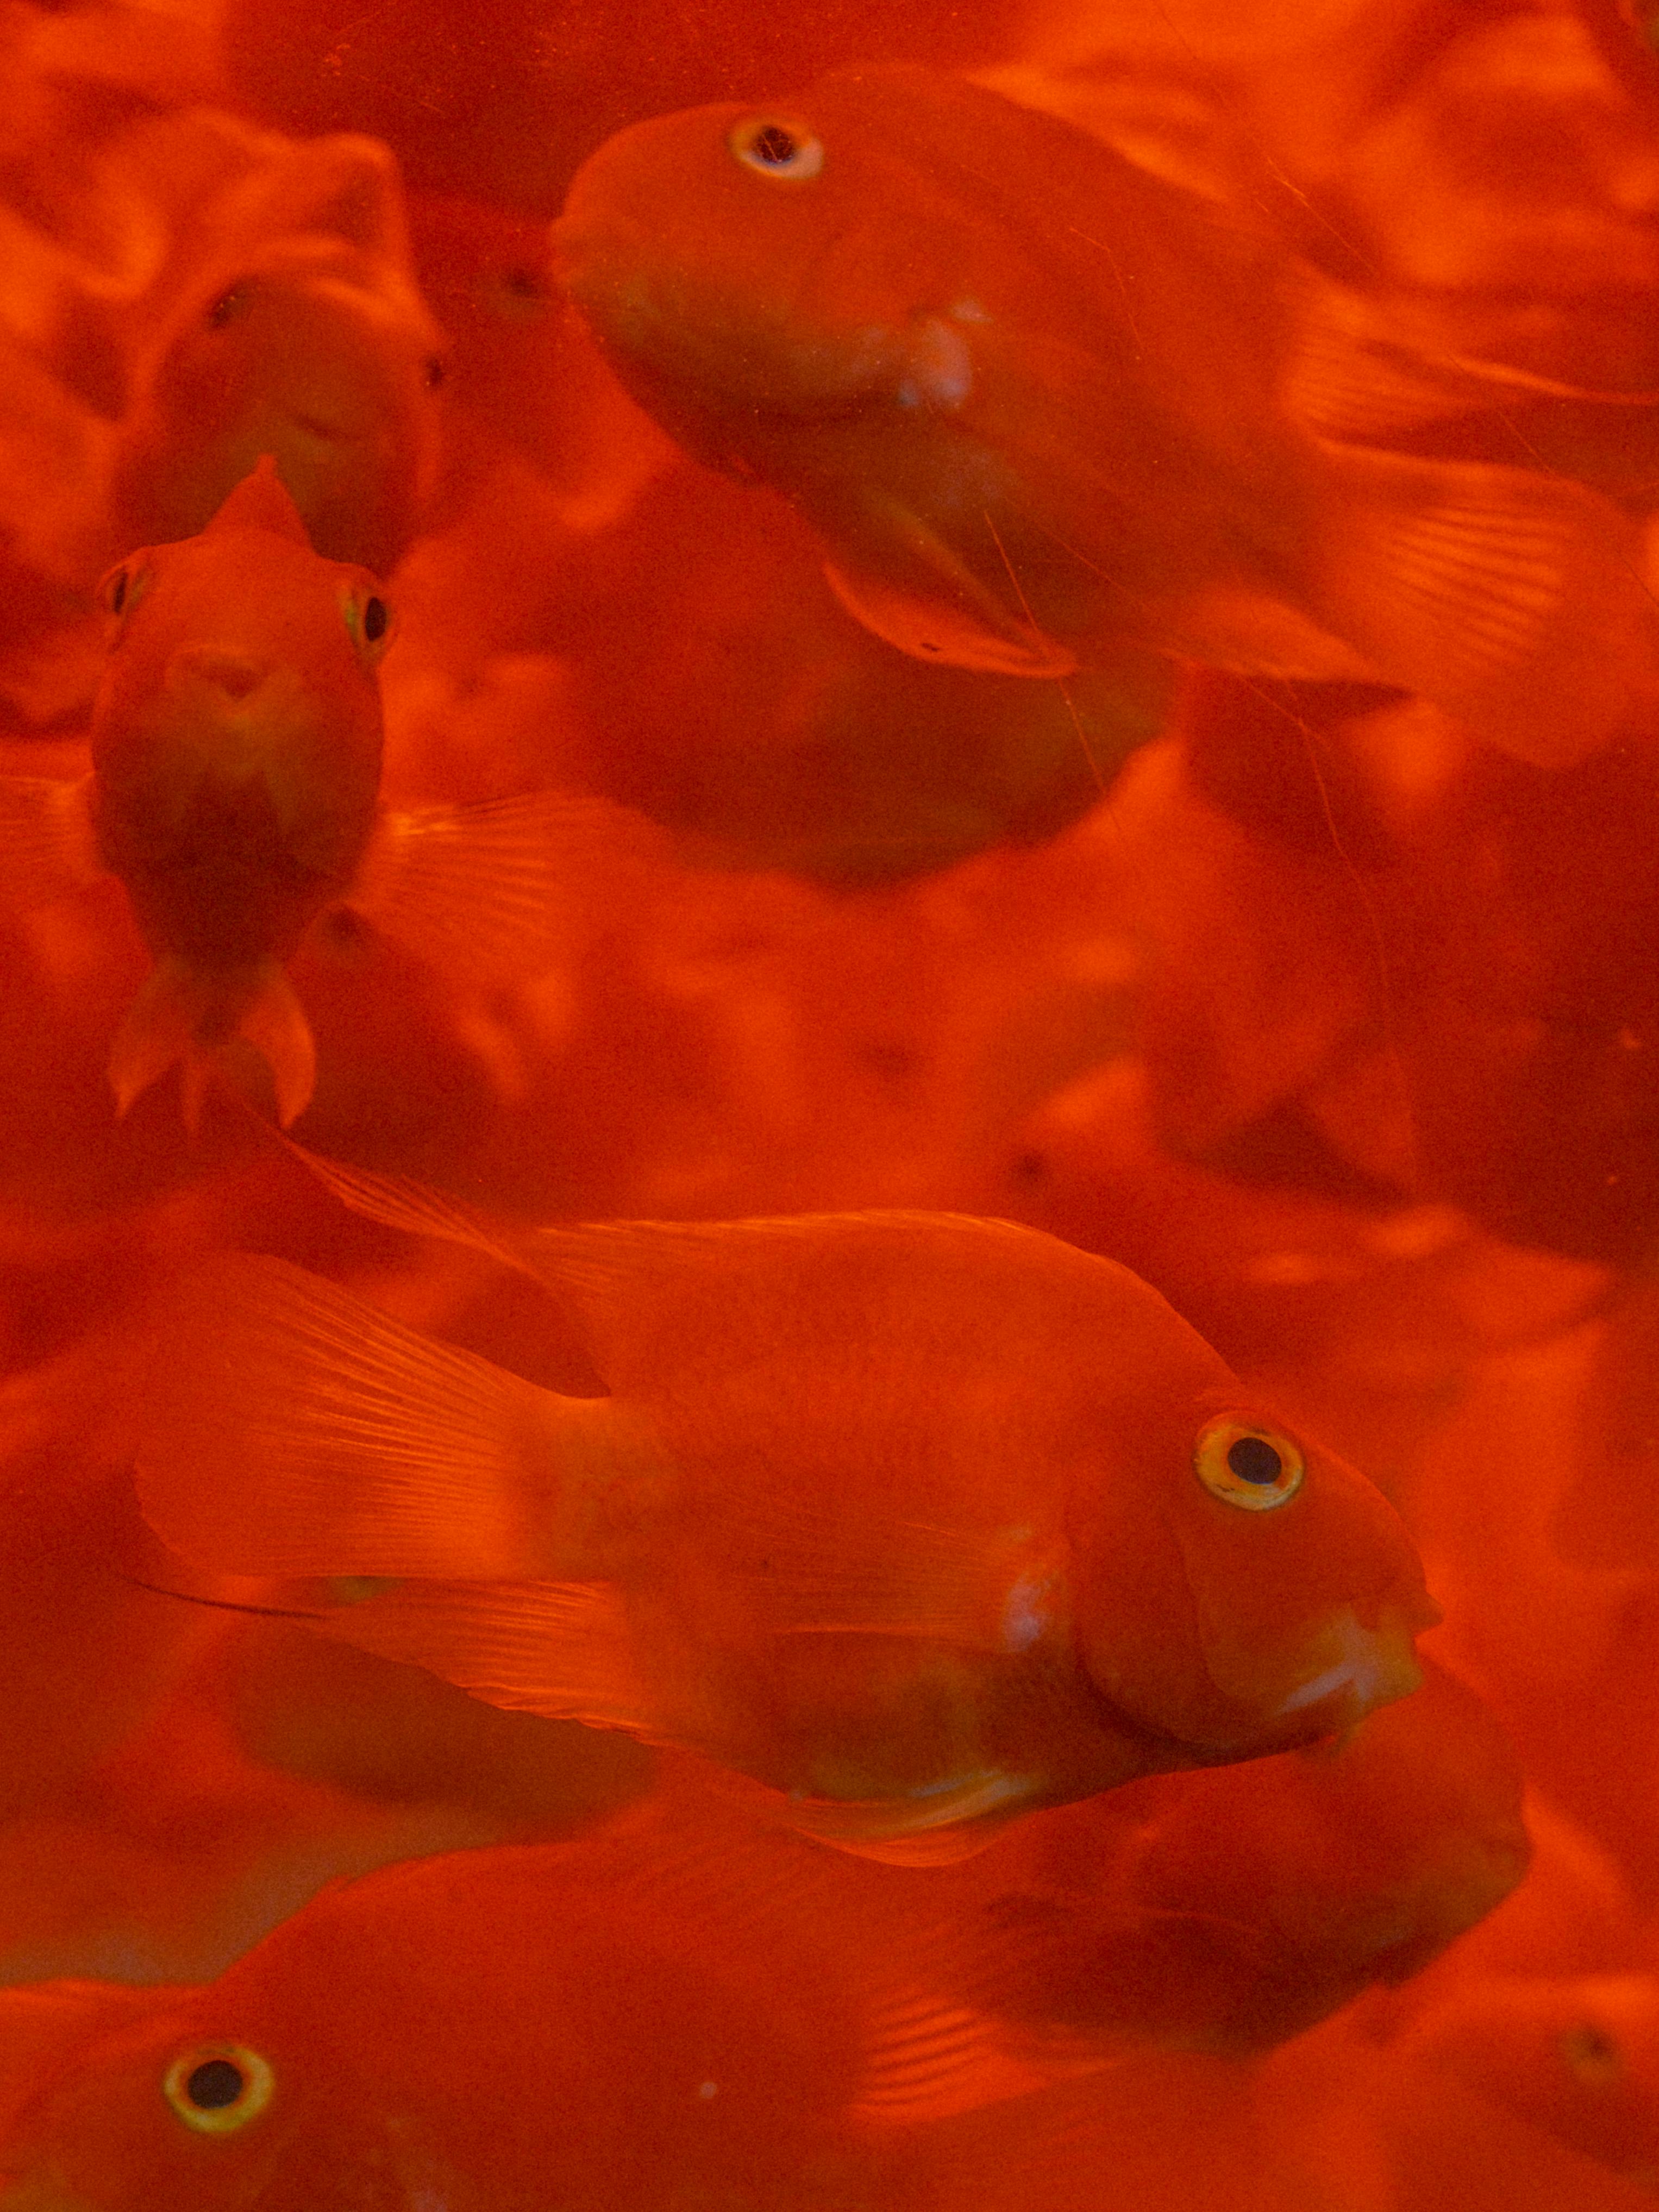 Redfish by Richard F Rose